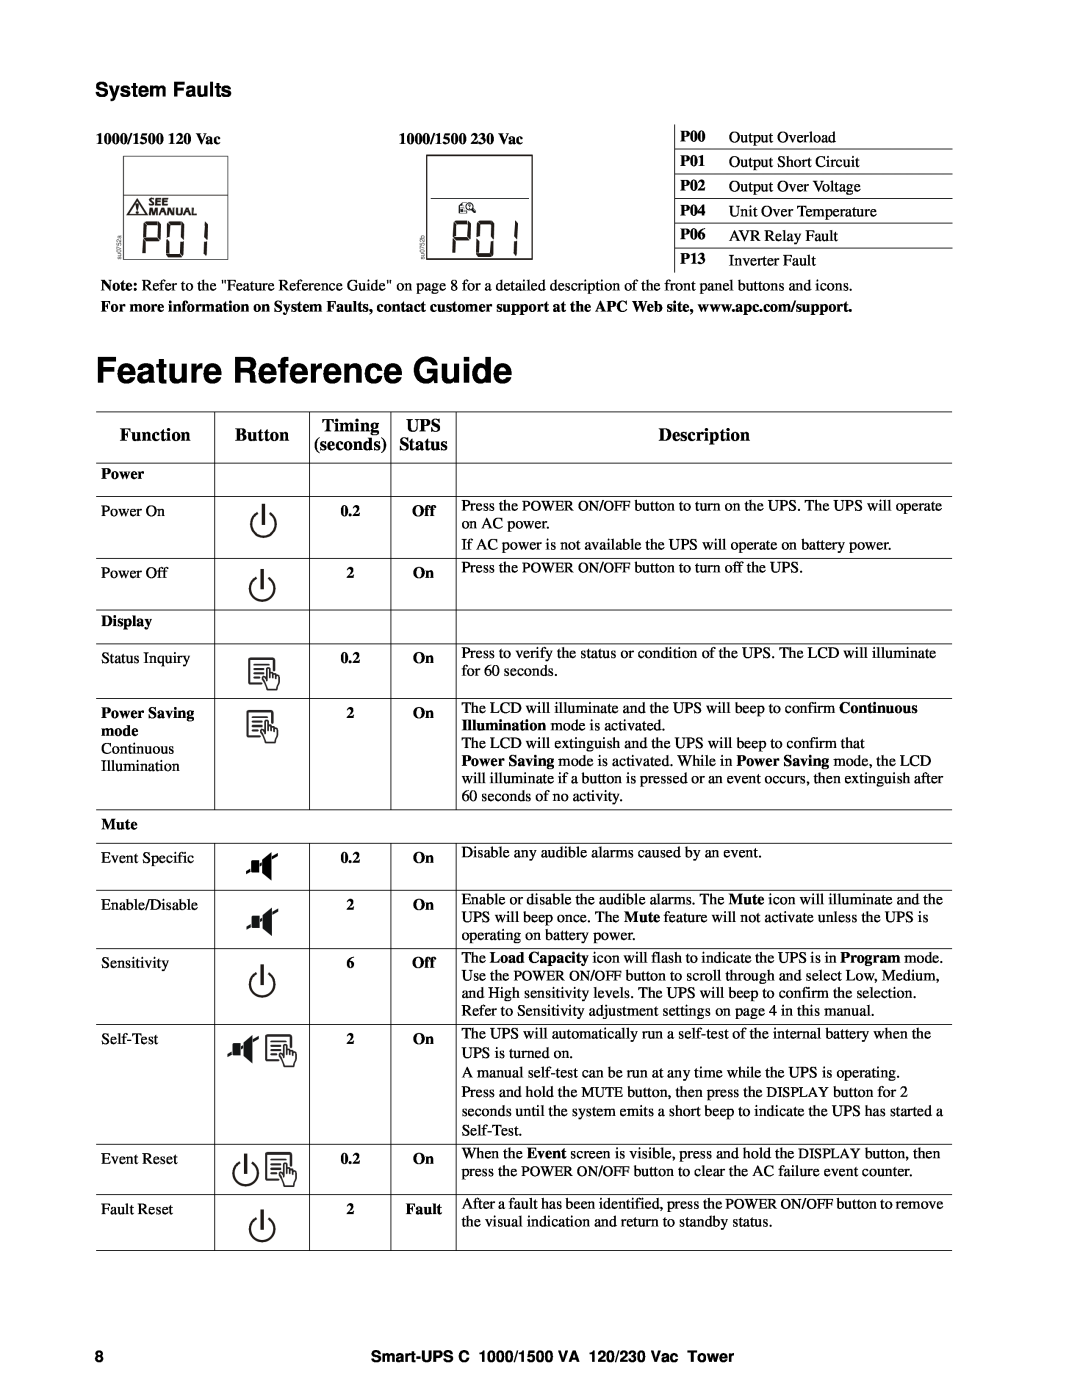 APC SMC1500 Feature Reference Guide, Function, Button, Timing, Description, Smart-UPS C 1000/1500 VA 120/230 Vac Tower 